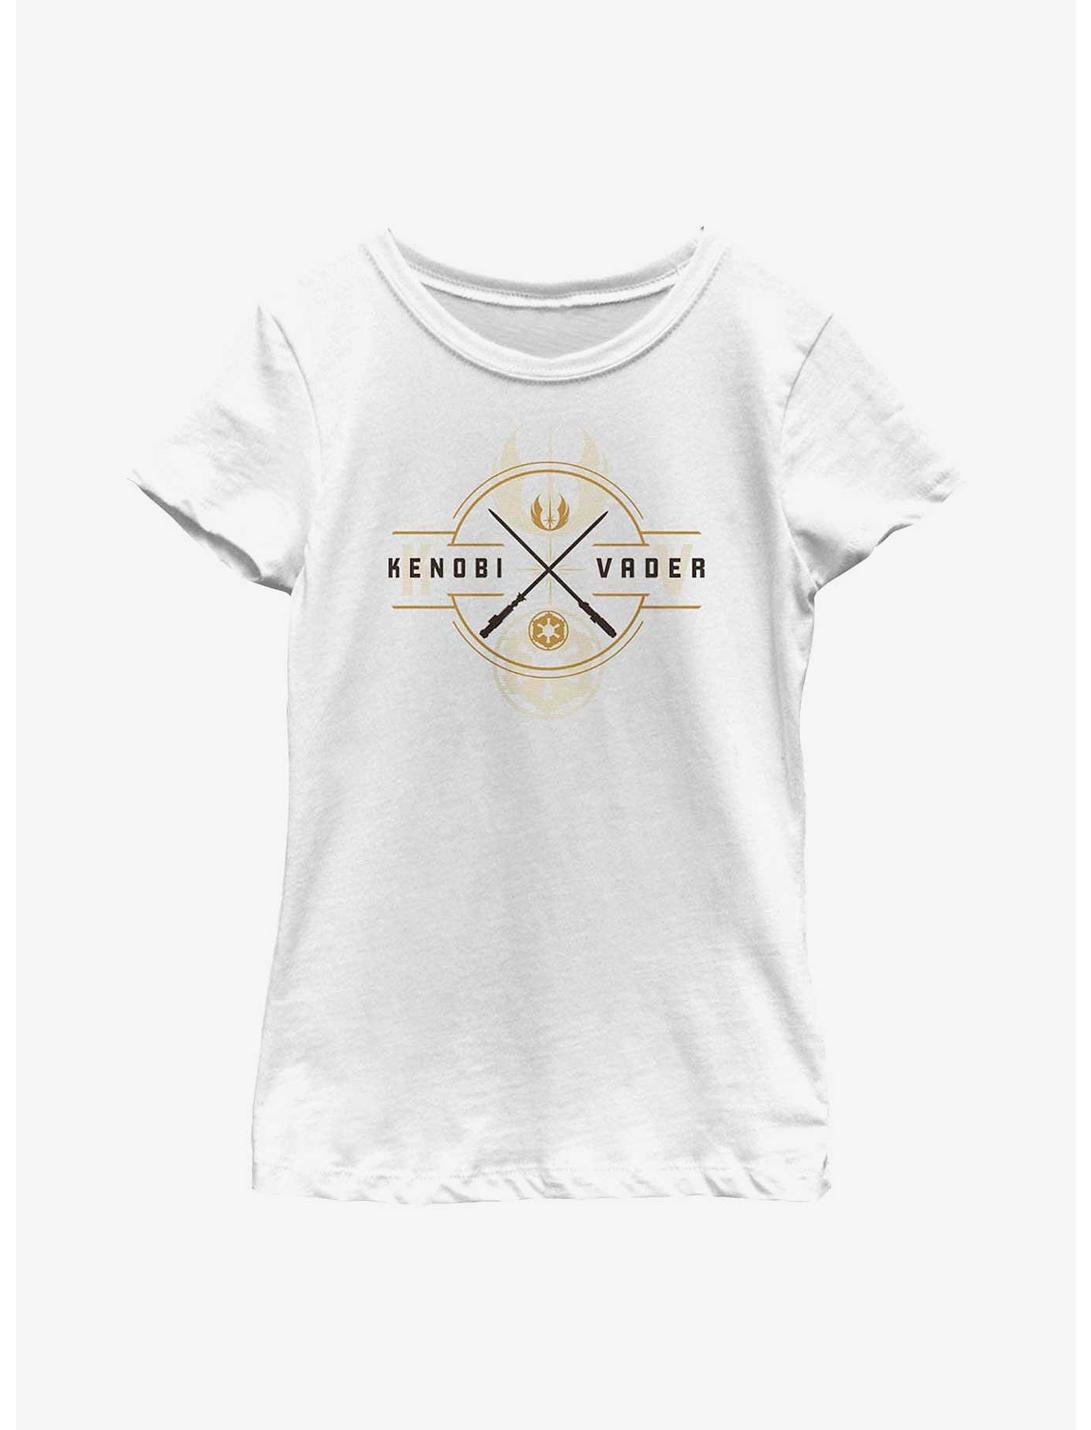 Star Wars Obi-Wan Kenobi Light Saber Crest Youth Girls T-Shirt, WHITE, hi-res